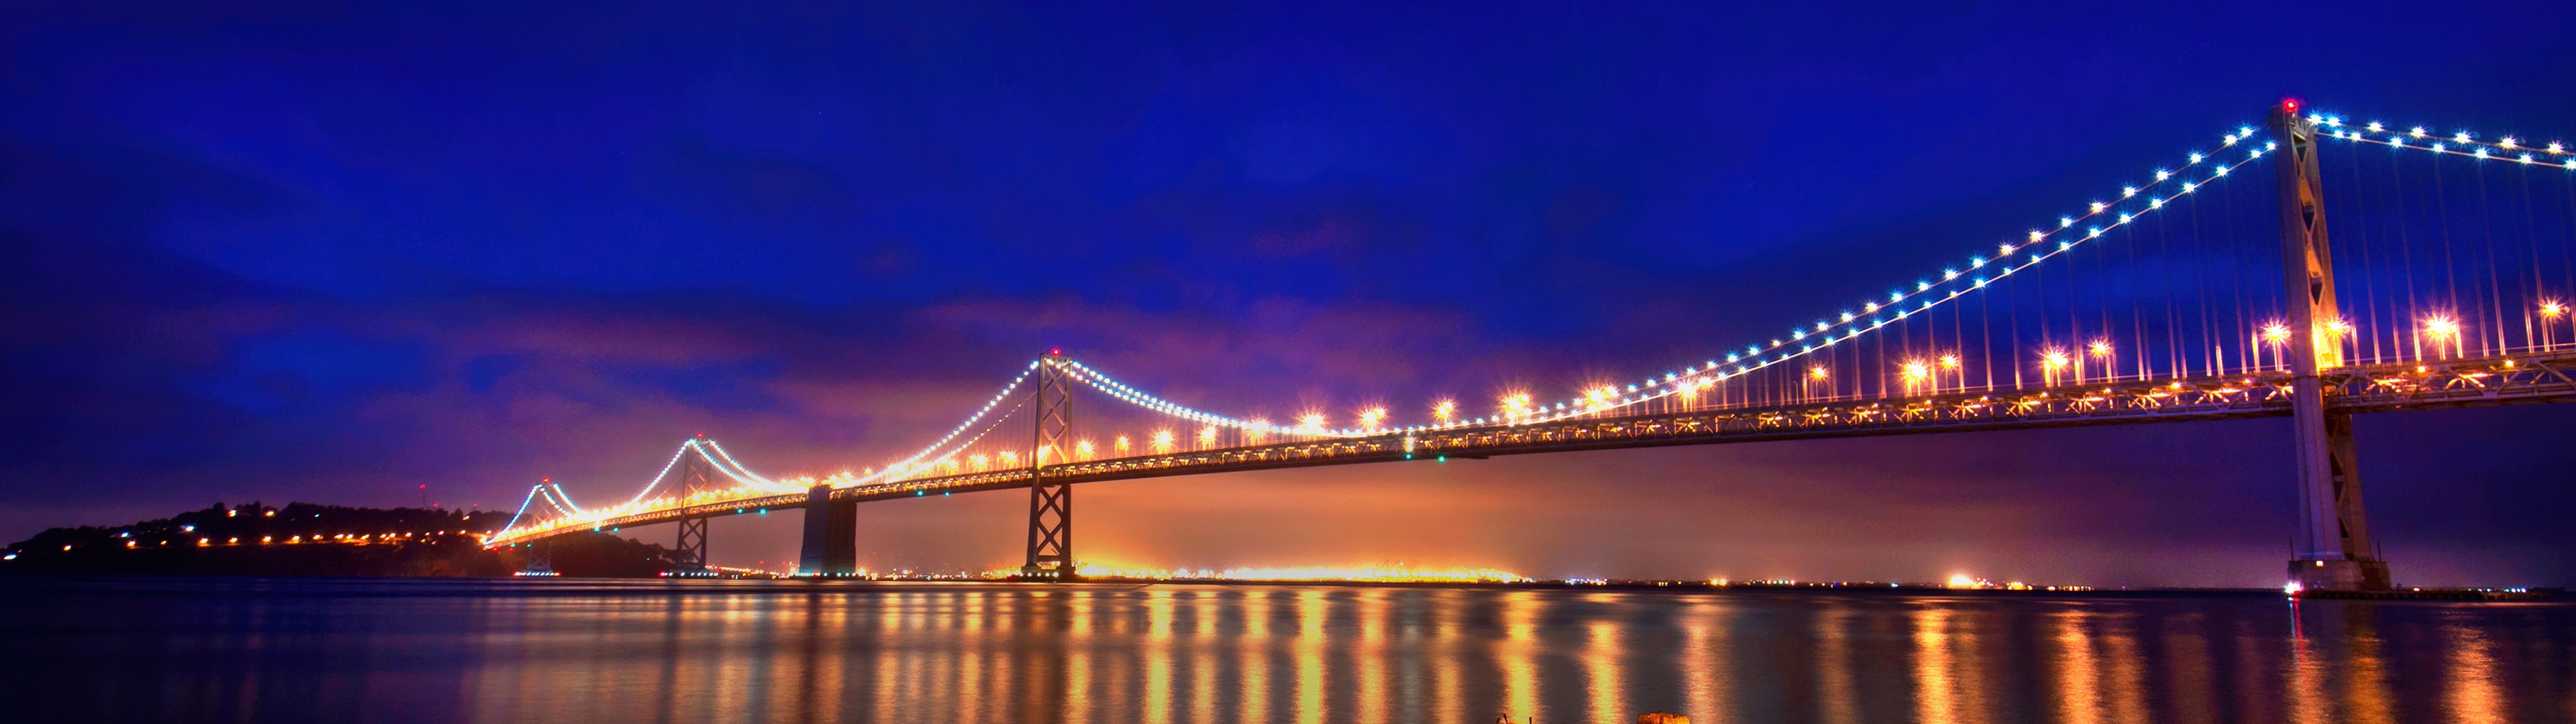 San Francisco Oakland Bay Bridge, Night reflections in blue, 3840x1080 Dual Screen Desktop